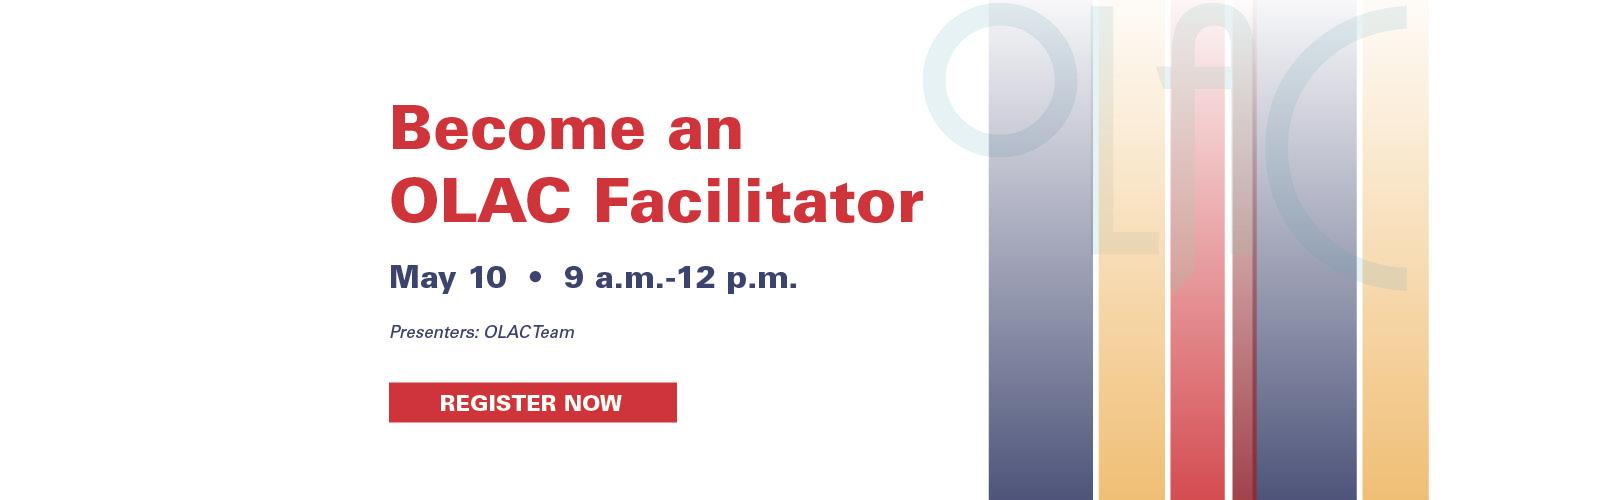 May 10, 9am - 12pm - Become an OLAC Facilitator